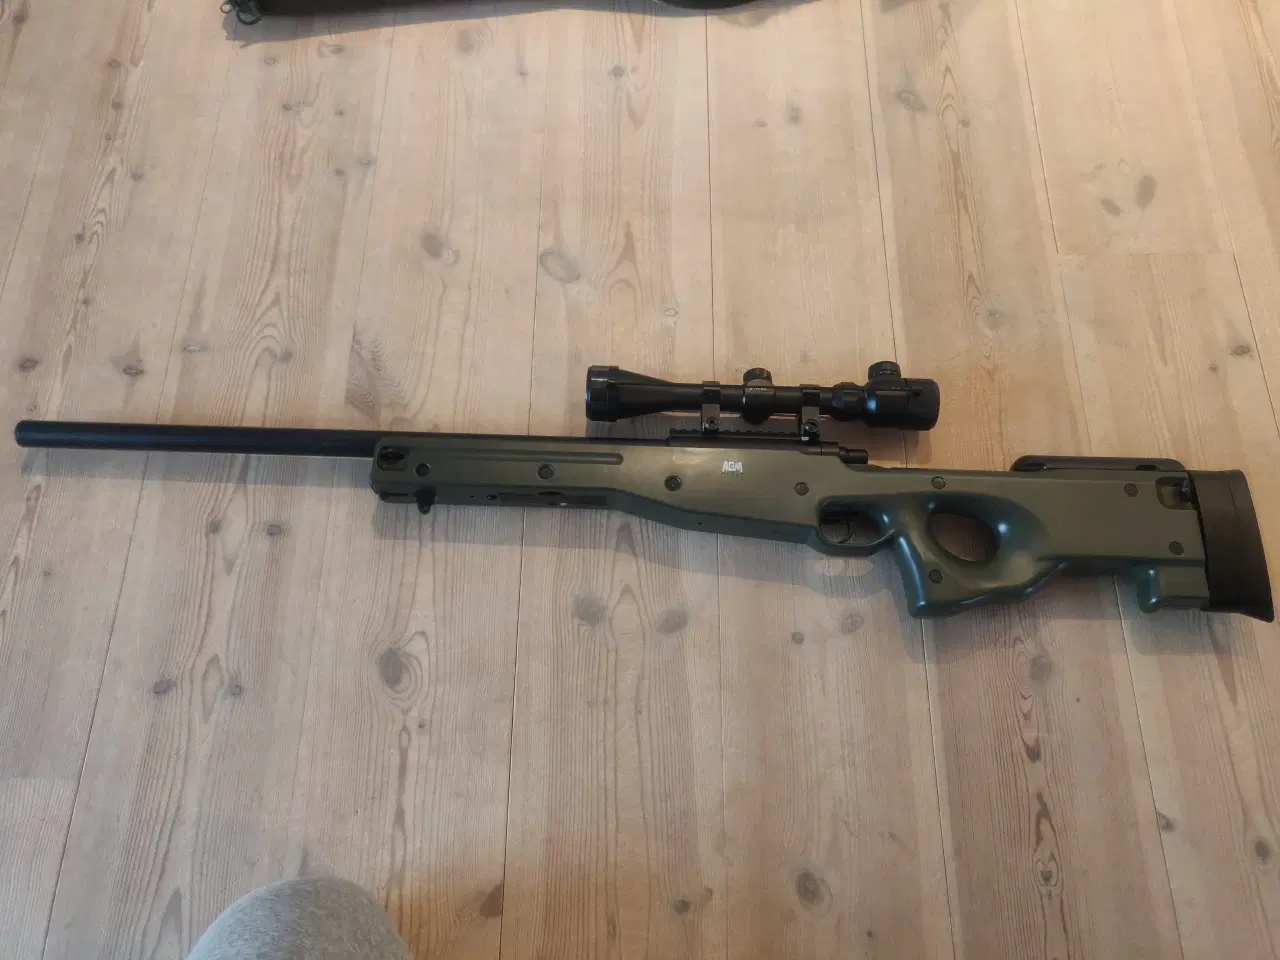 Billede 5 - Sniper rifle l96a1 3-9x40 scope med lys hardball 